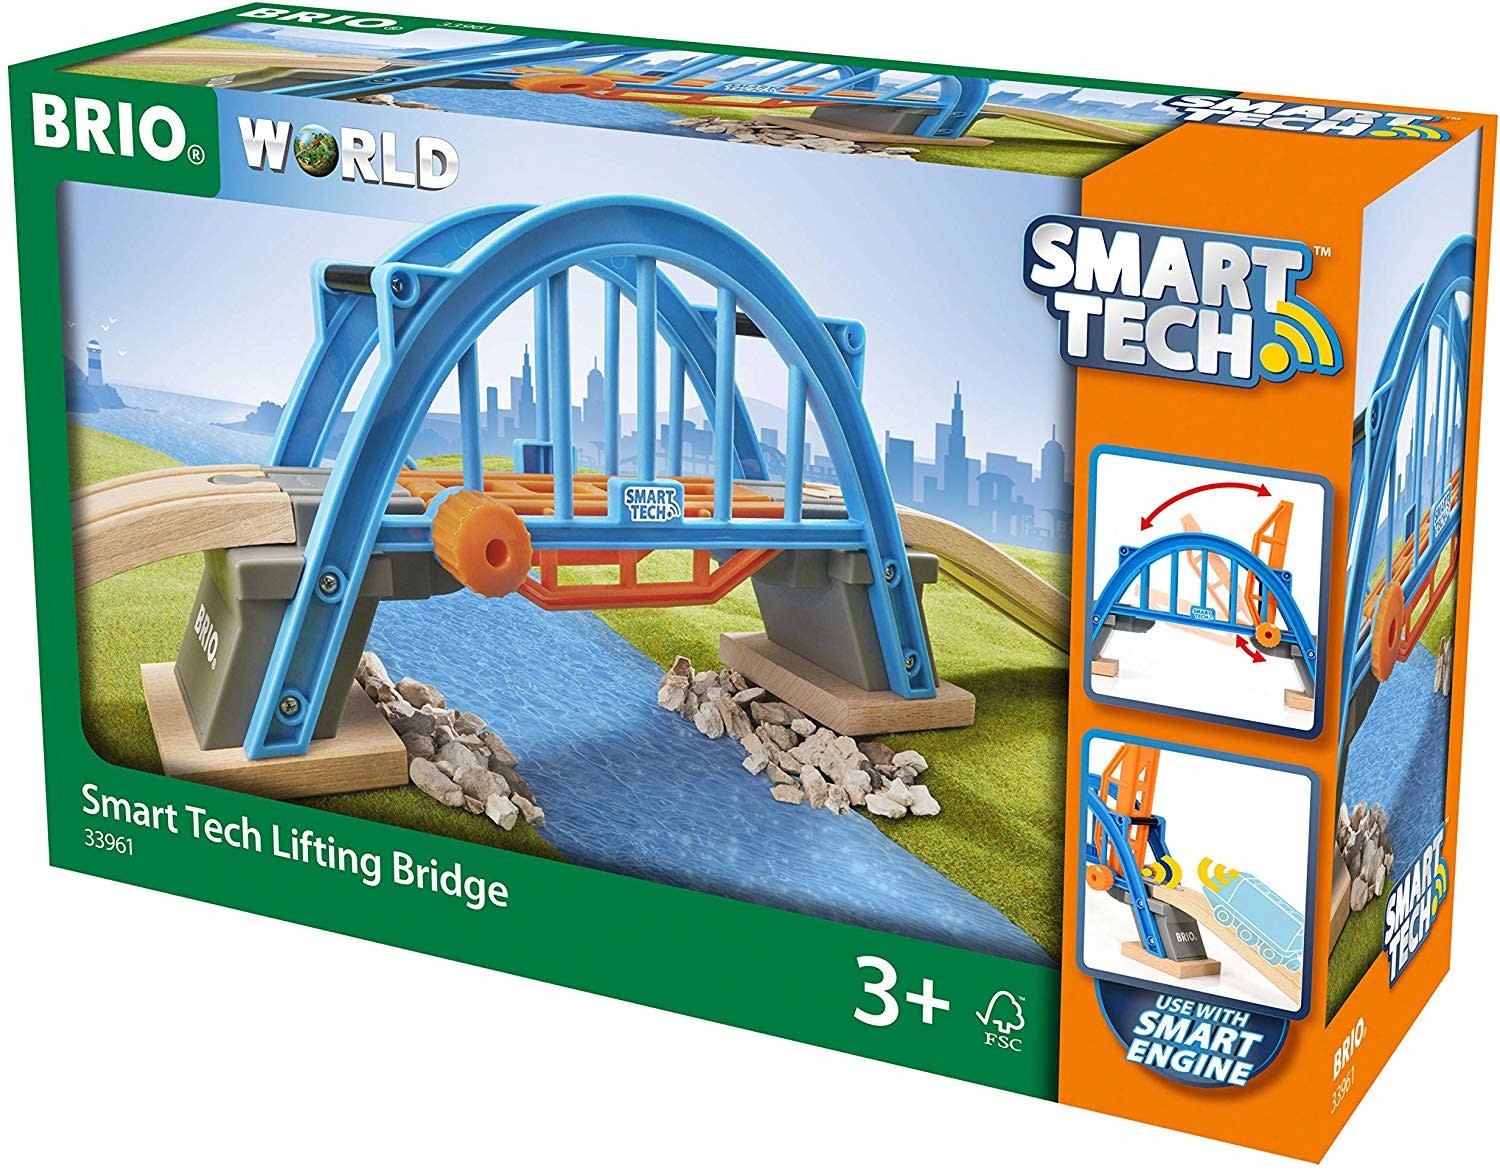 BRIO SMART TECH Lifting Bridge